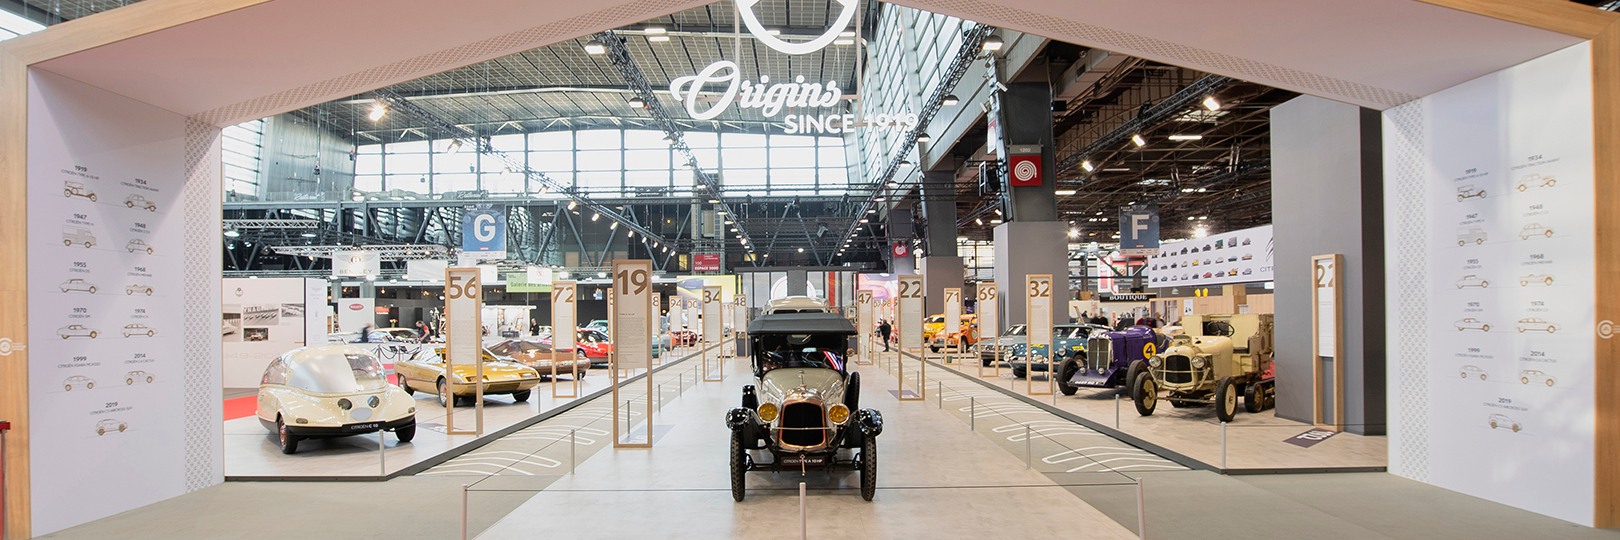 100 años de historia de Citroën (I)